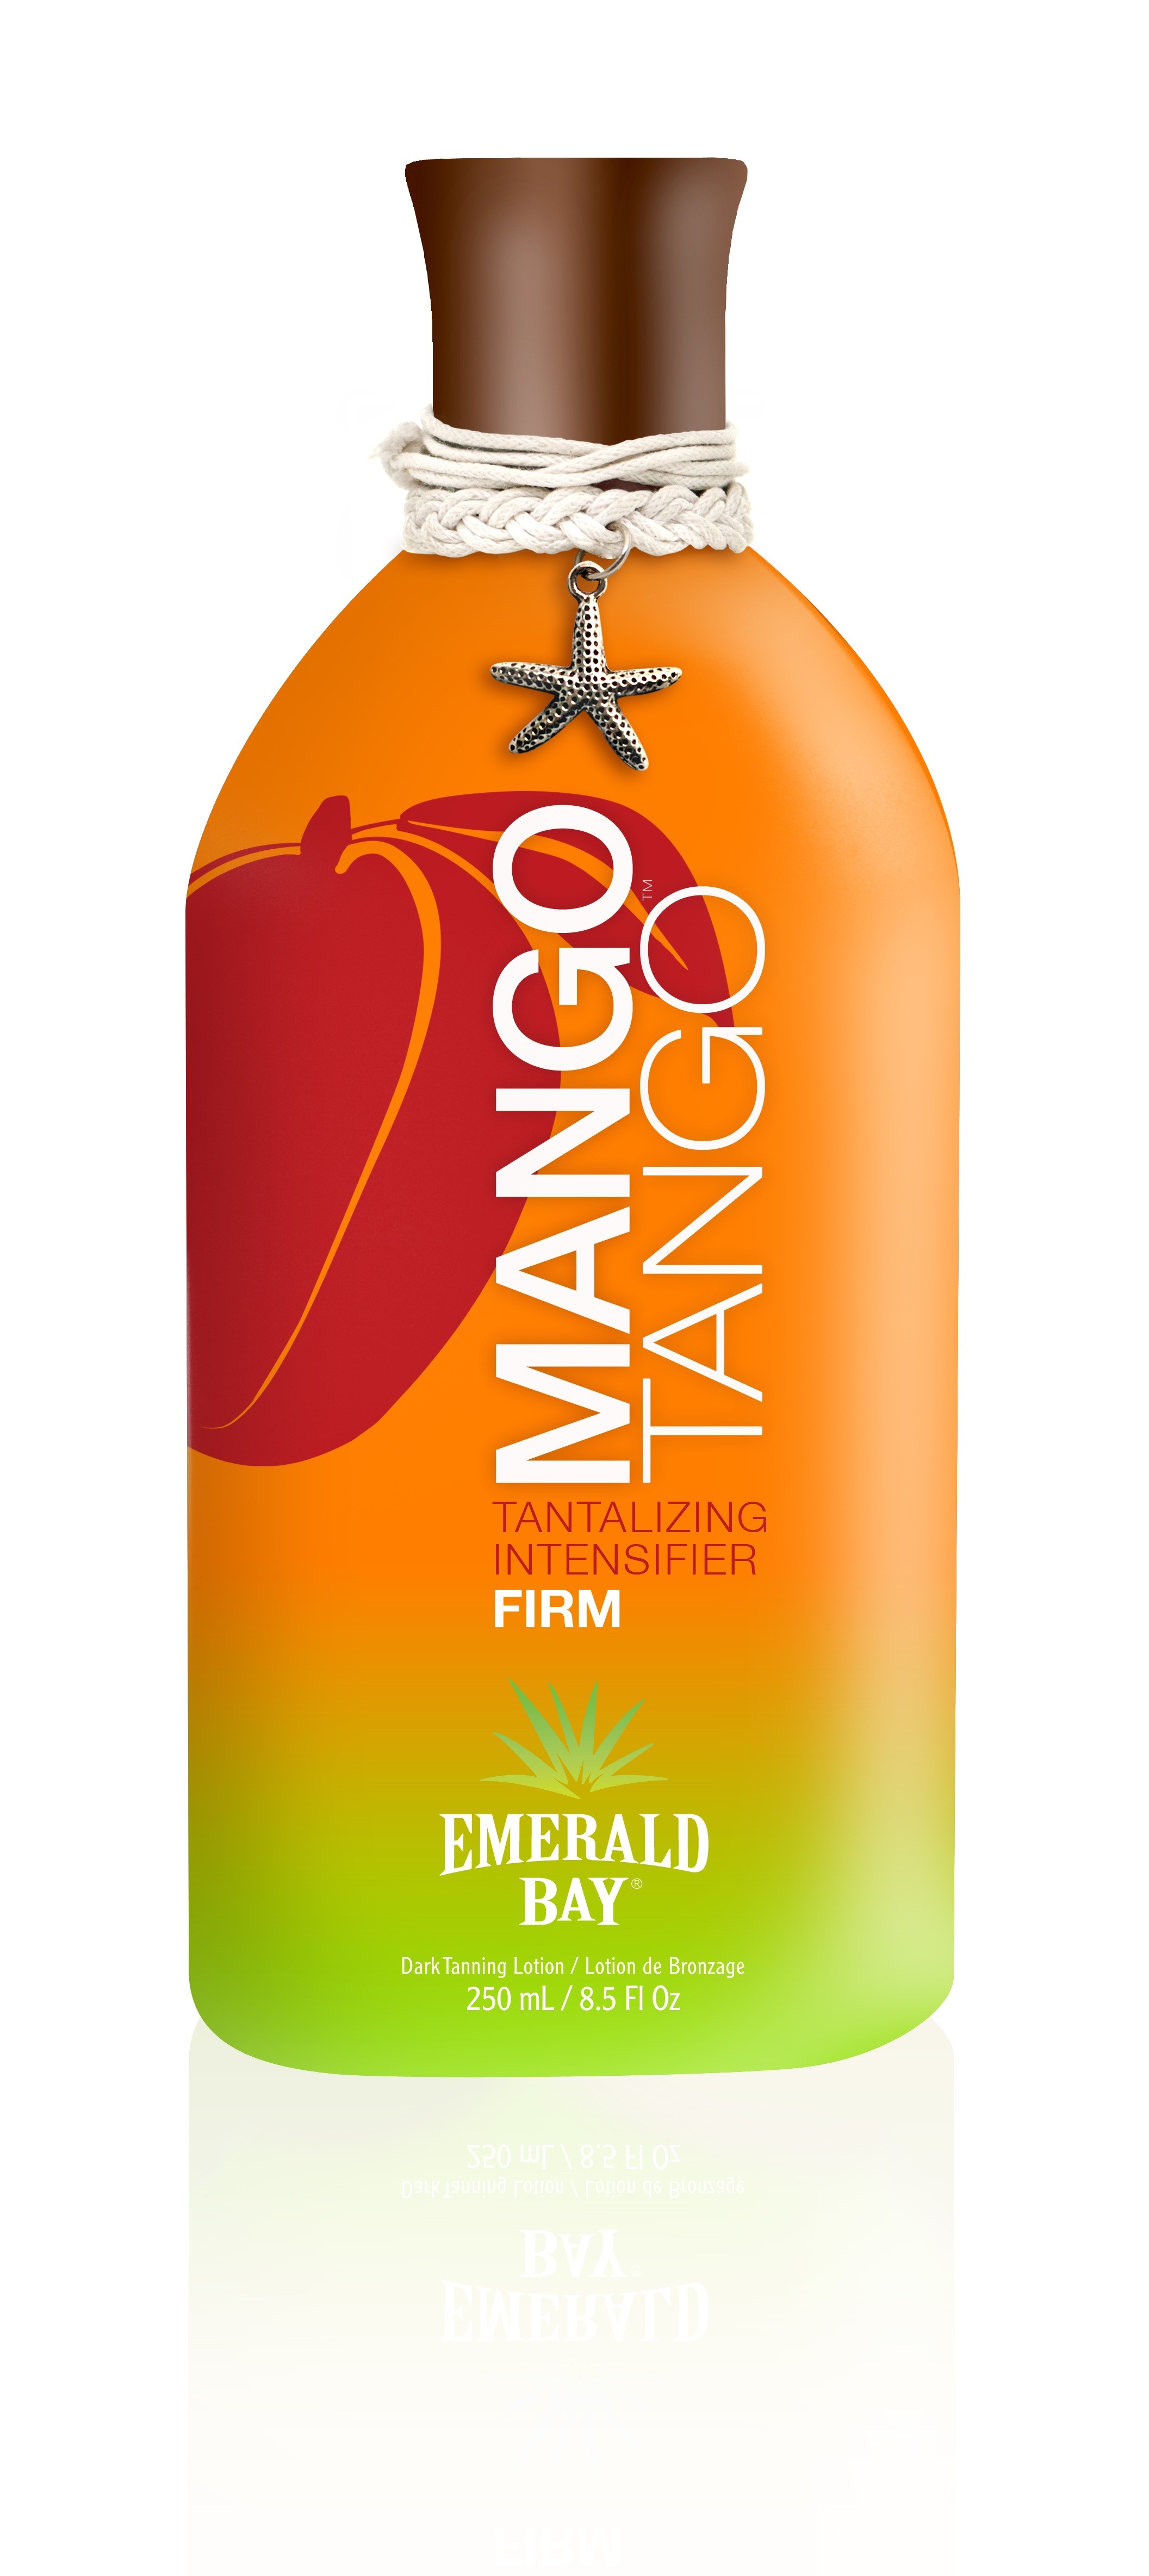 mango tango